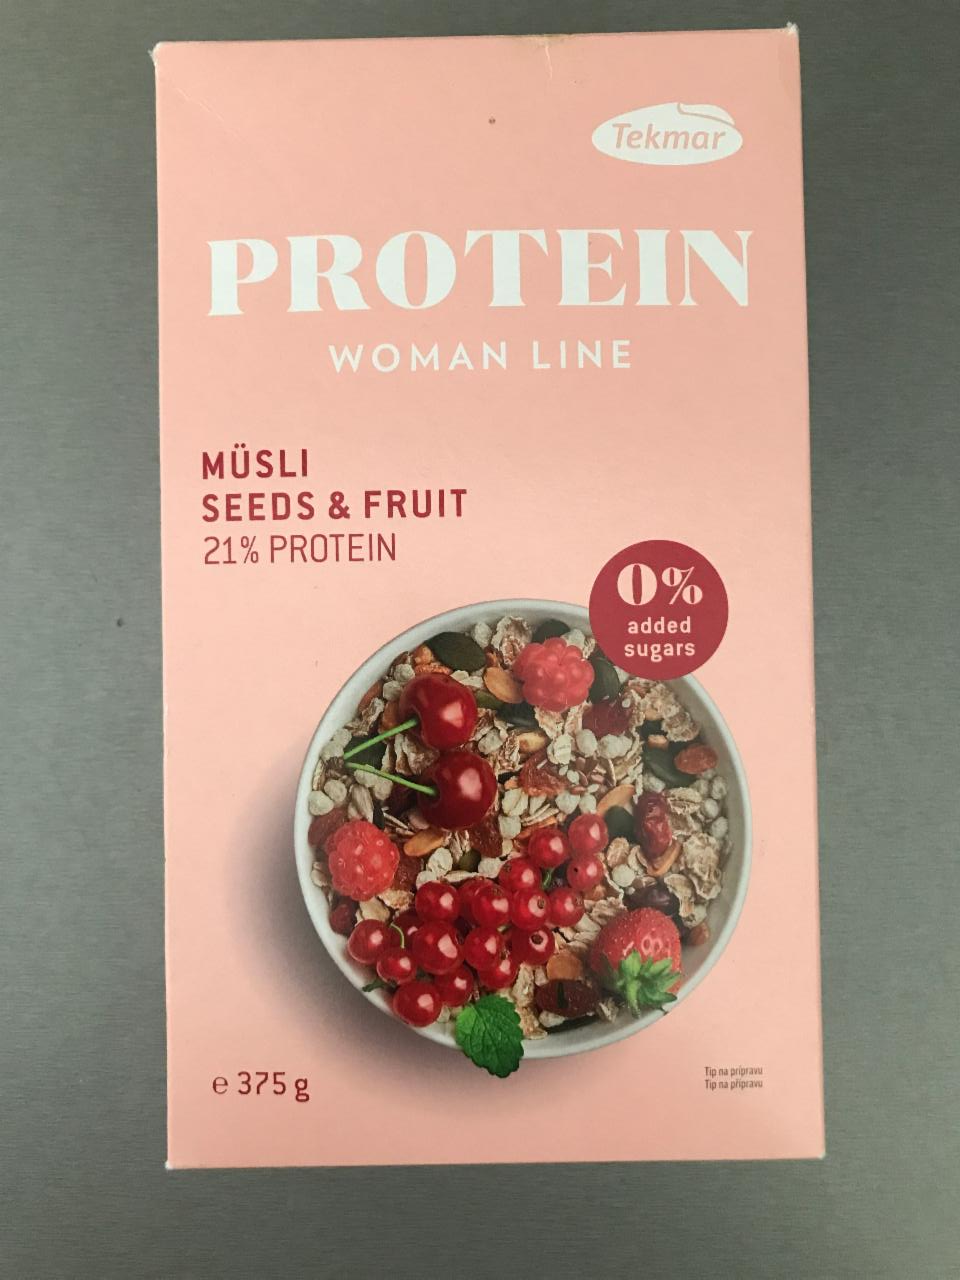 Fotografie - Müsli seeds & fruit Protein Woman Line Tekmar